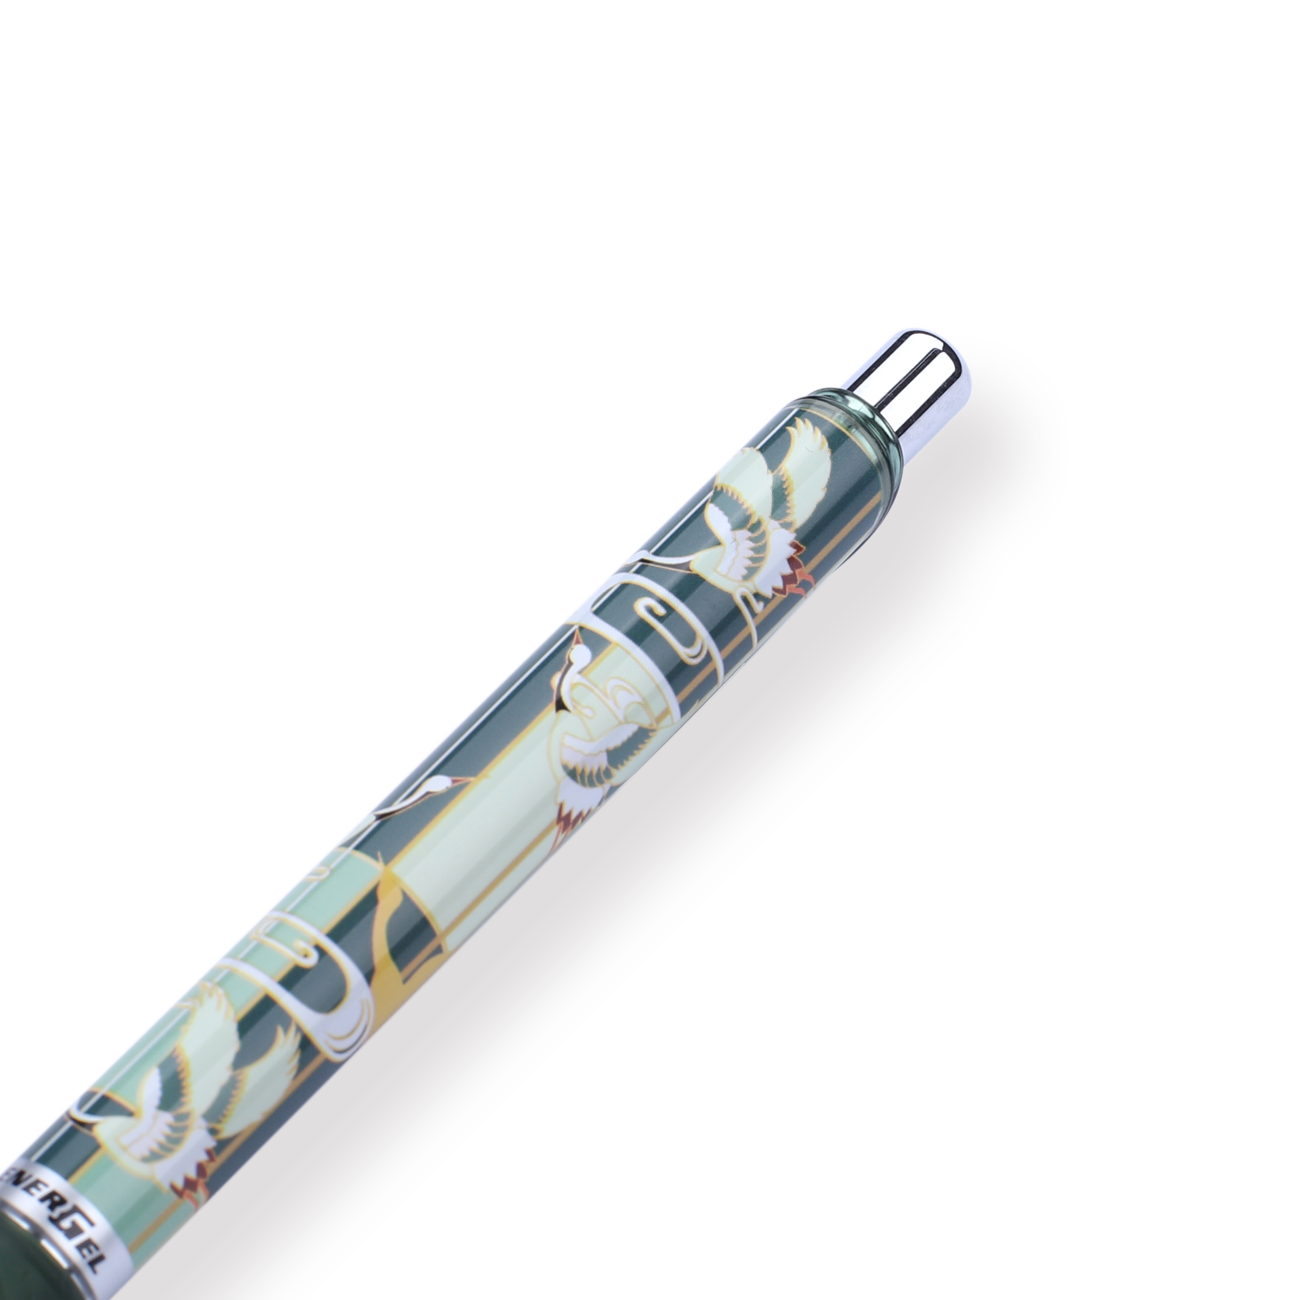 Pentel EnerGel Fall-themed Limited Edition Gel Pen - 0.5 mm - Green Grip - Stationery Pal